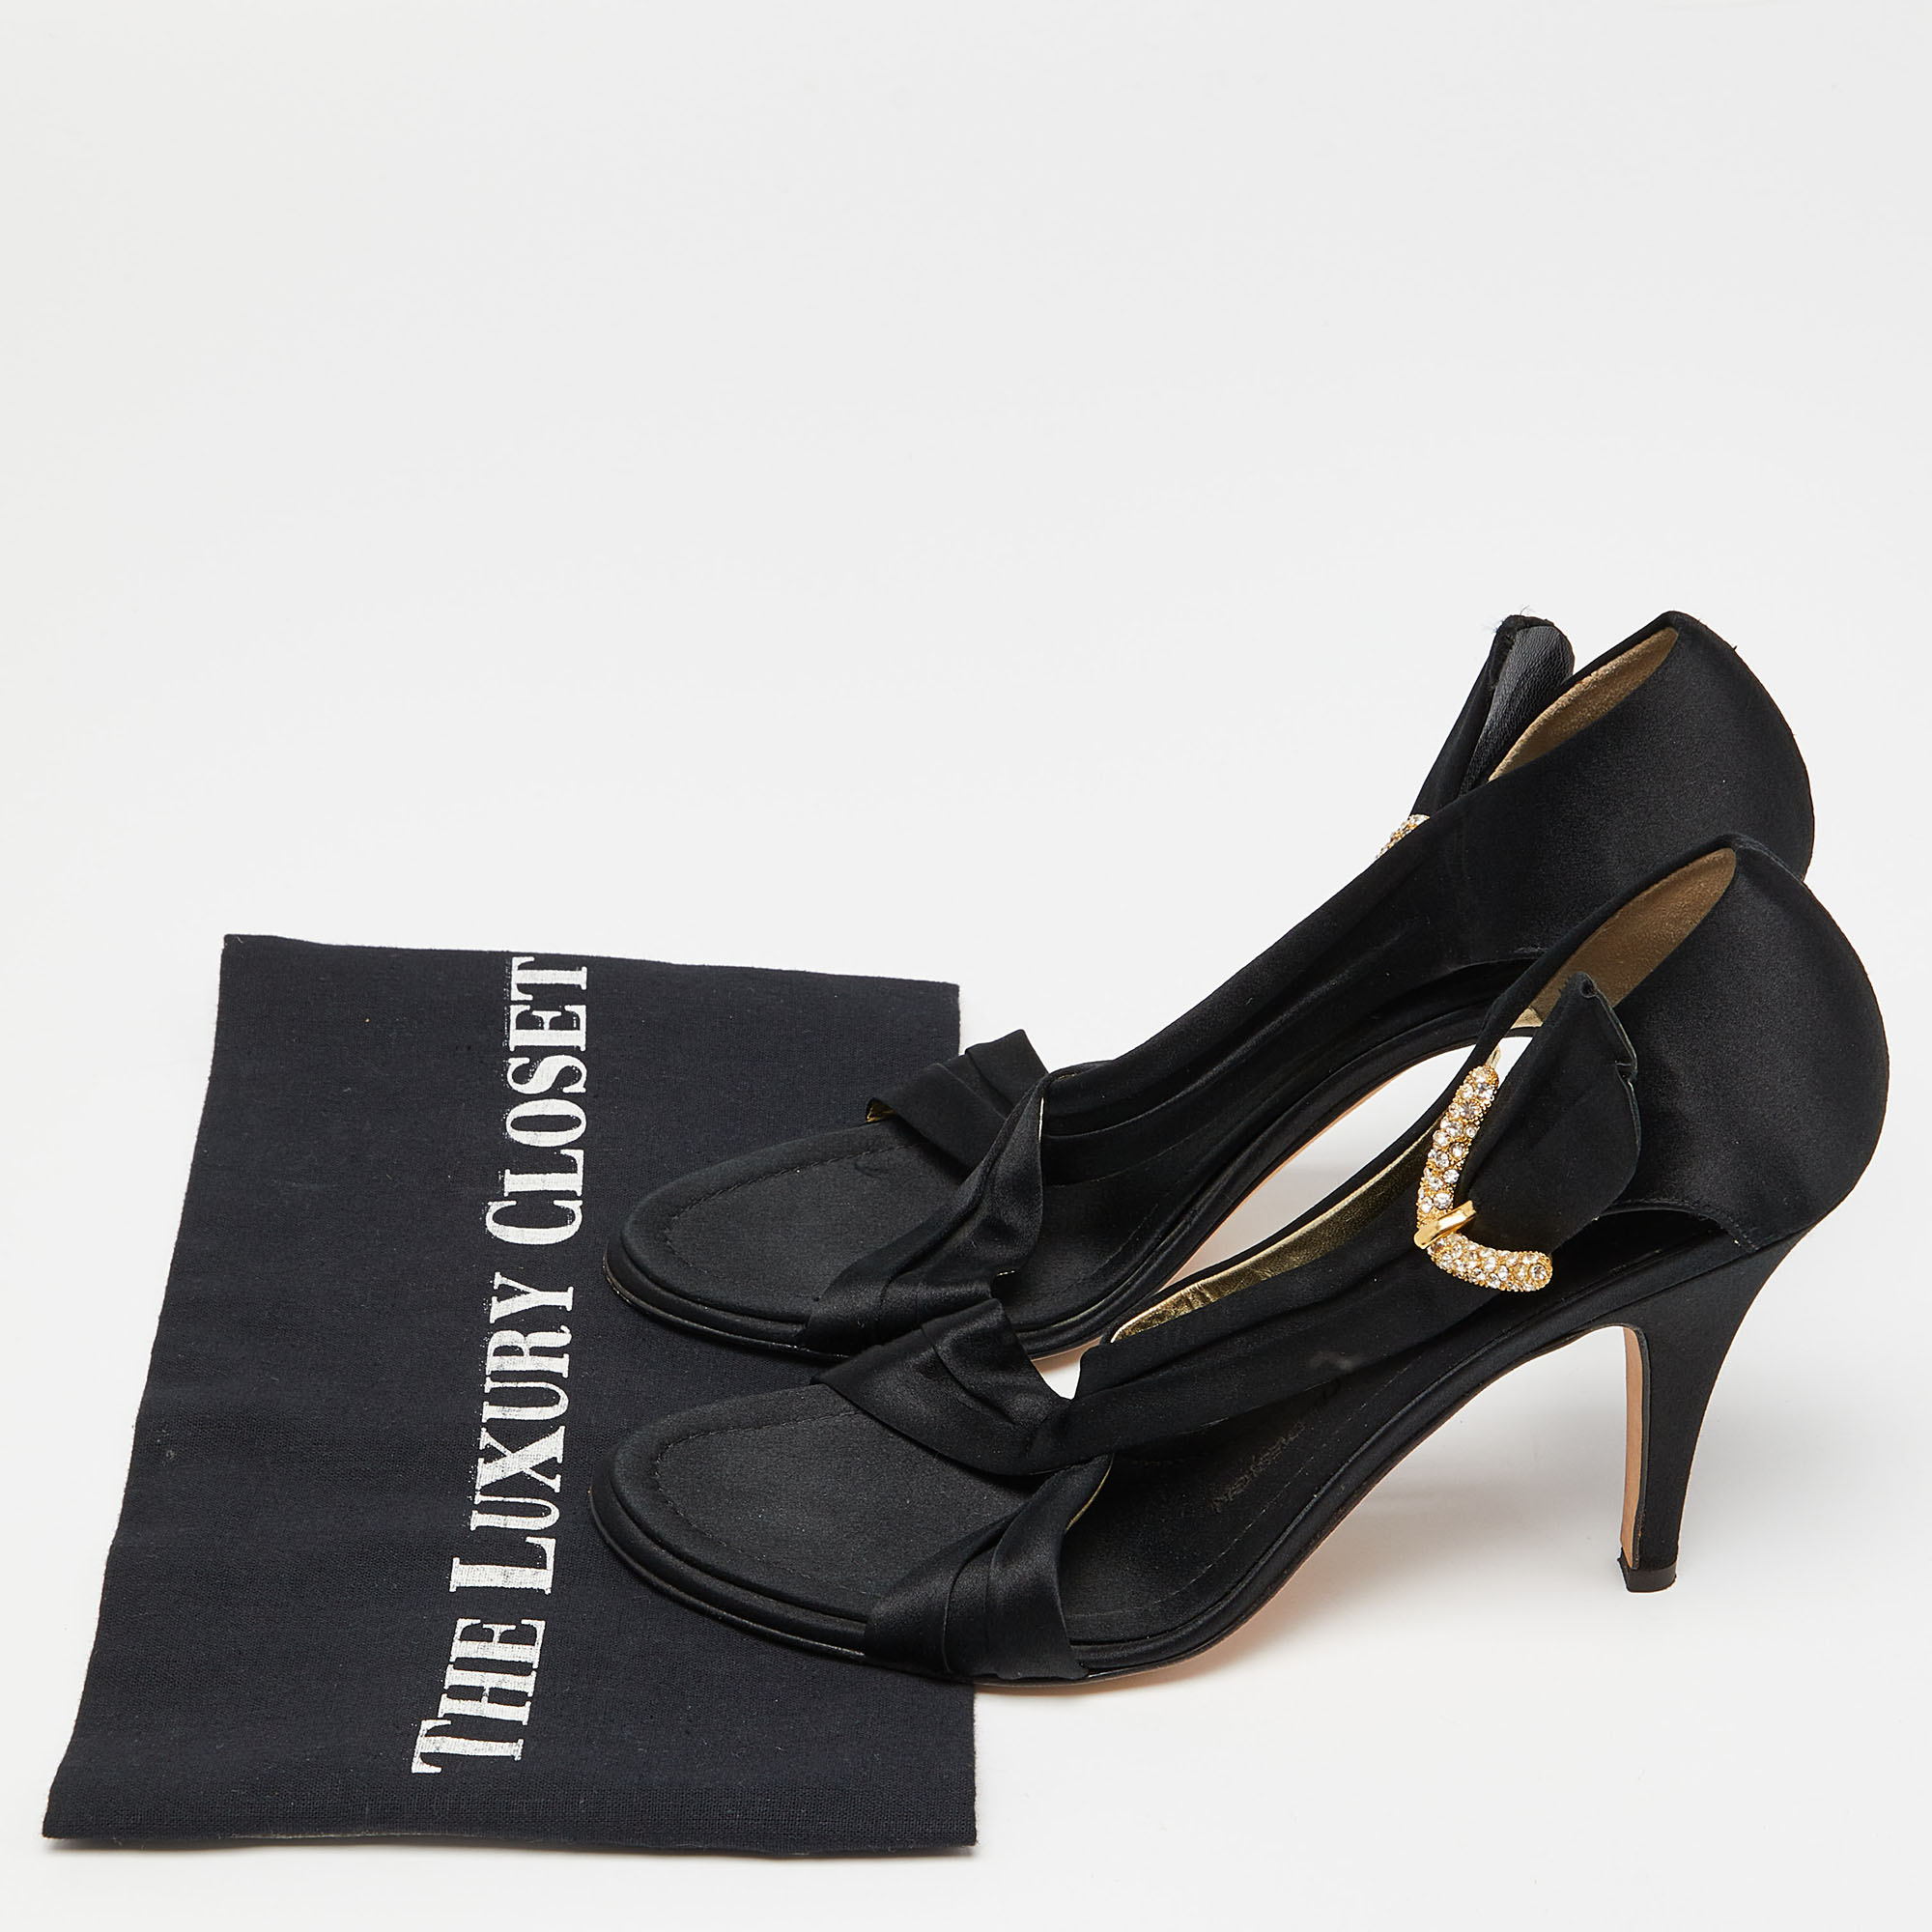 Giuseppe Zanotti Black Satin Crystal Embellished Sandals Size 38